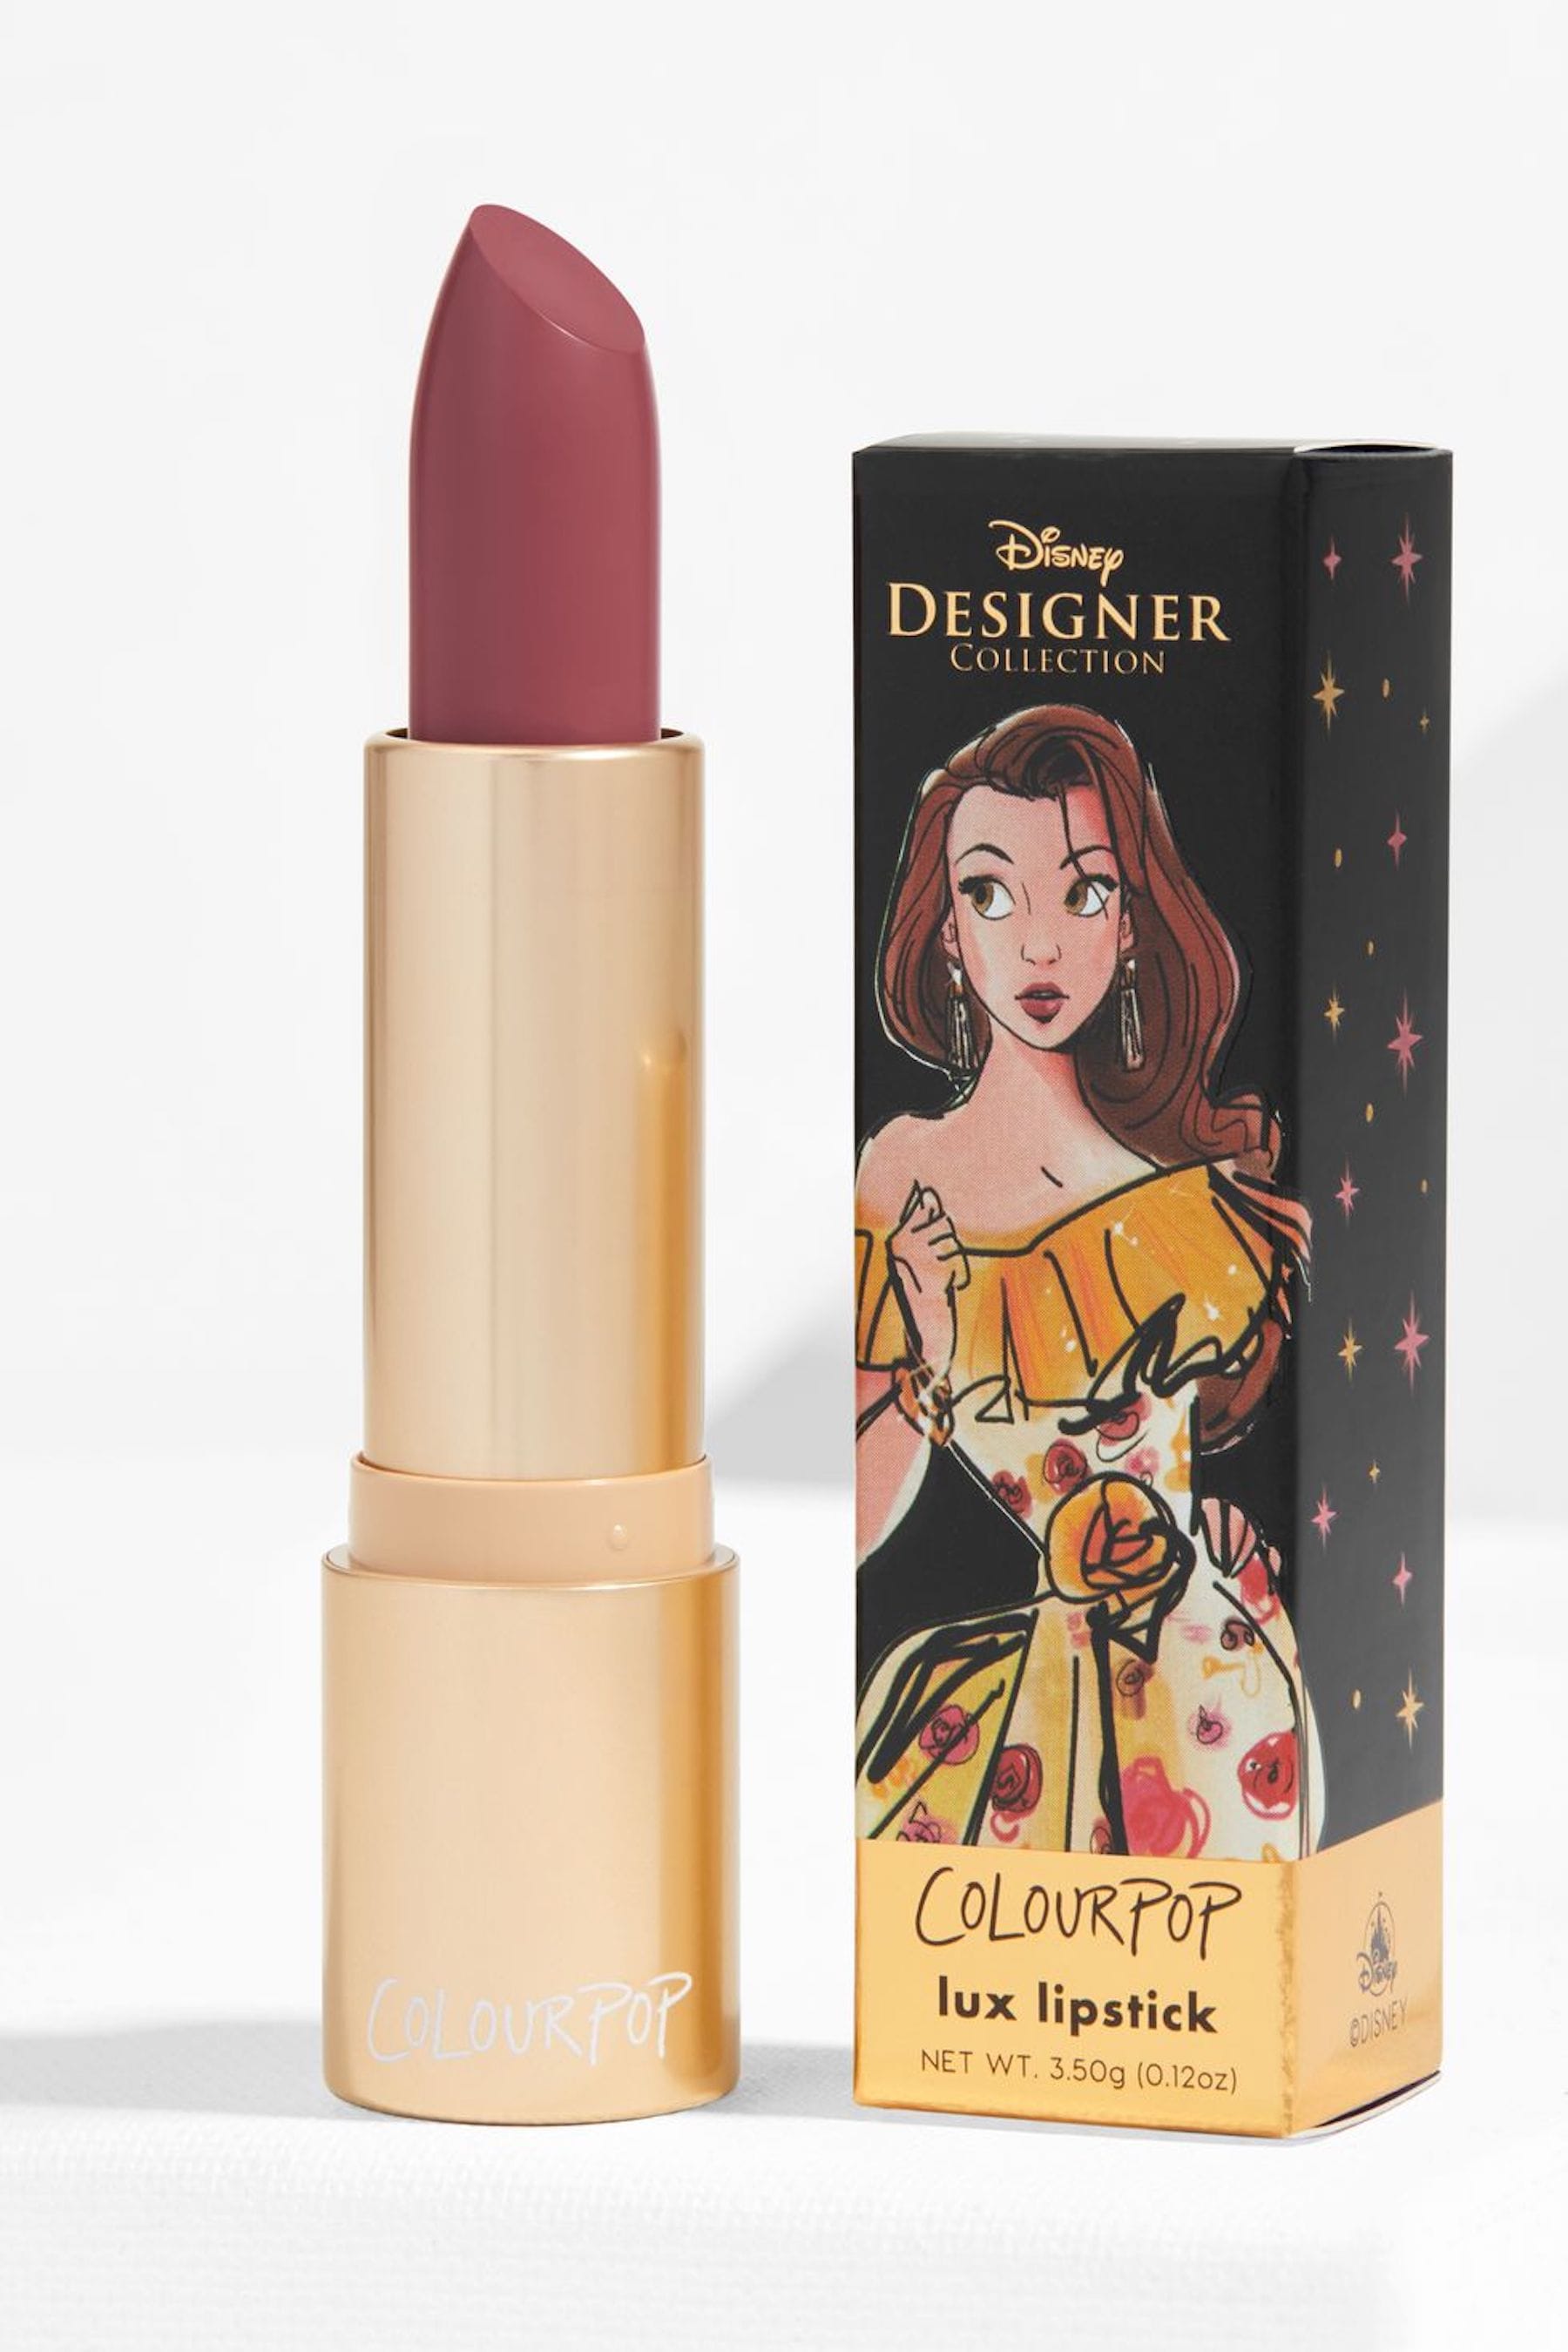 colourpop-x-disney-lux-lipstick-belle-7-packaging-www-colourpop-com-1537308832